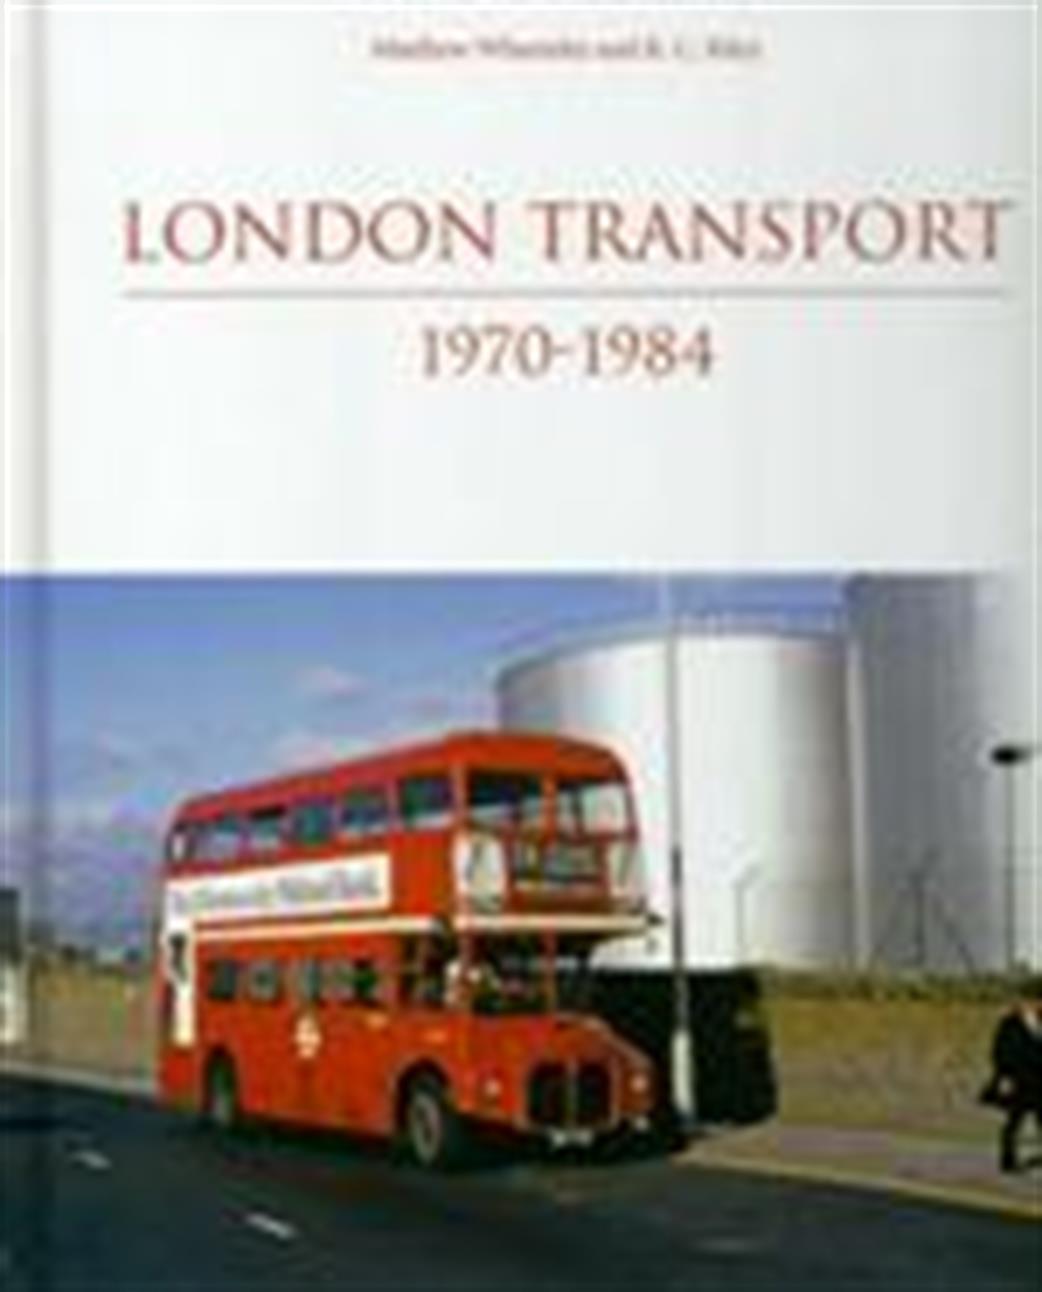 Ian Allan Publishing  9780711037304 London Transport 1970-1984 by M Wharmby & R C Riley